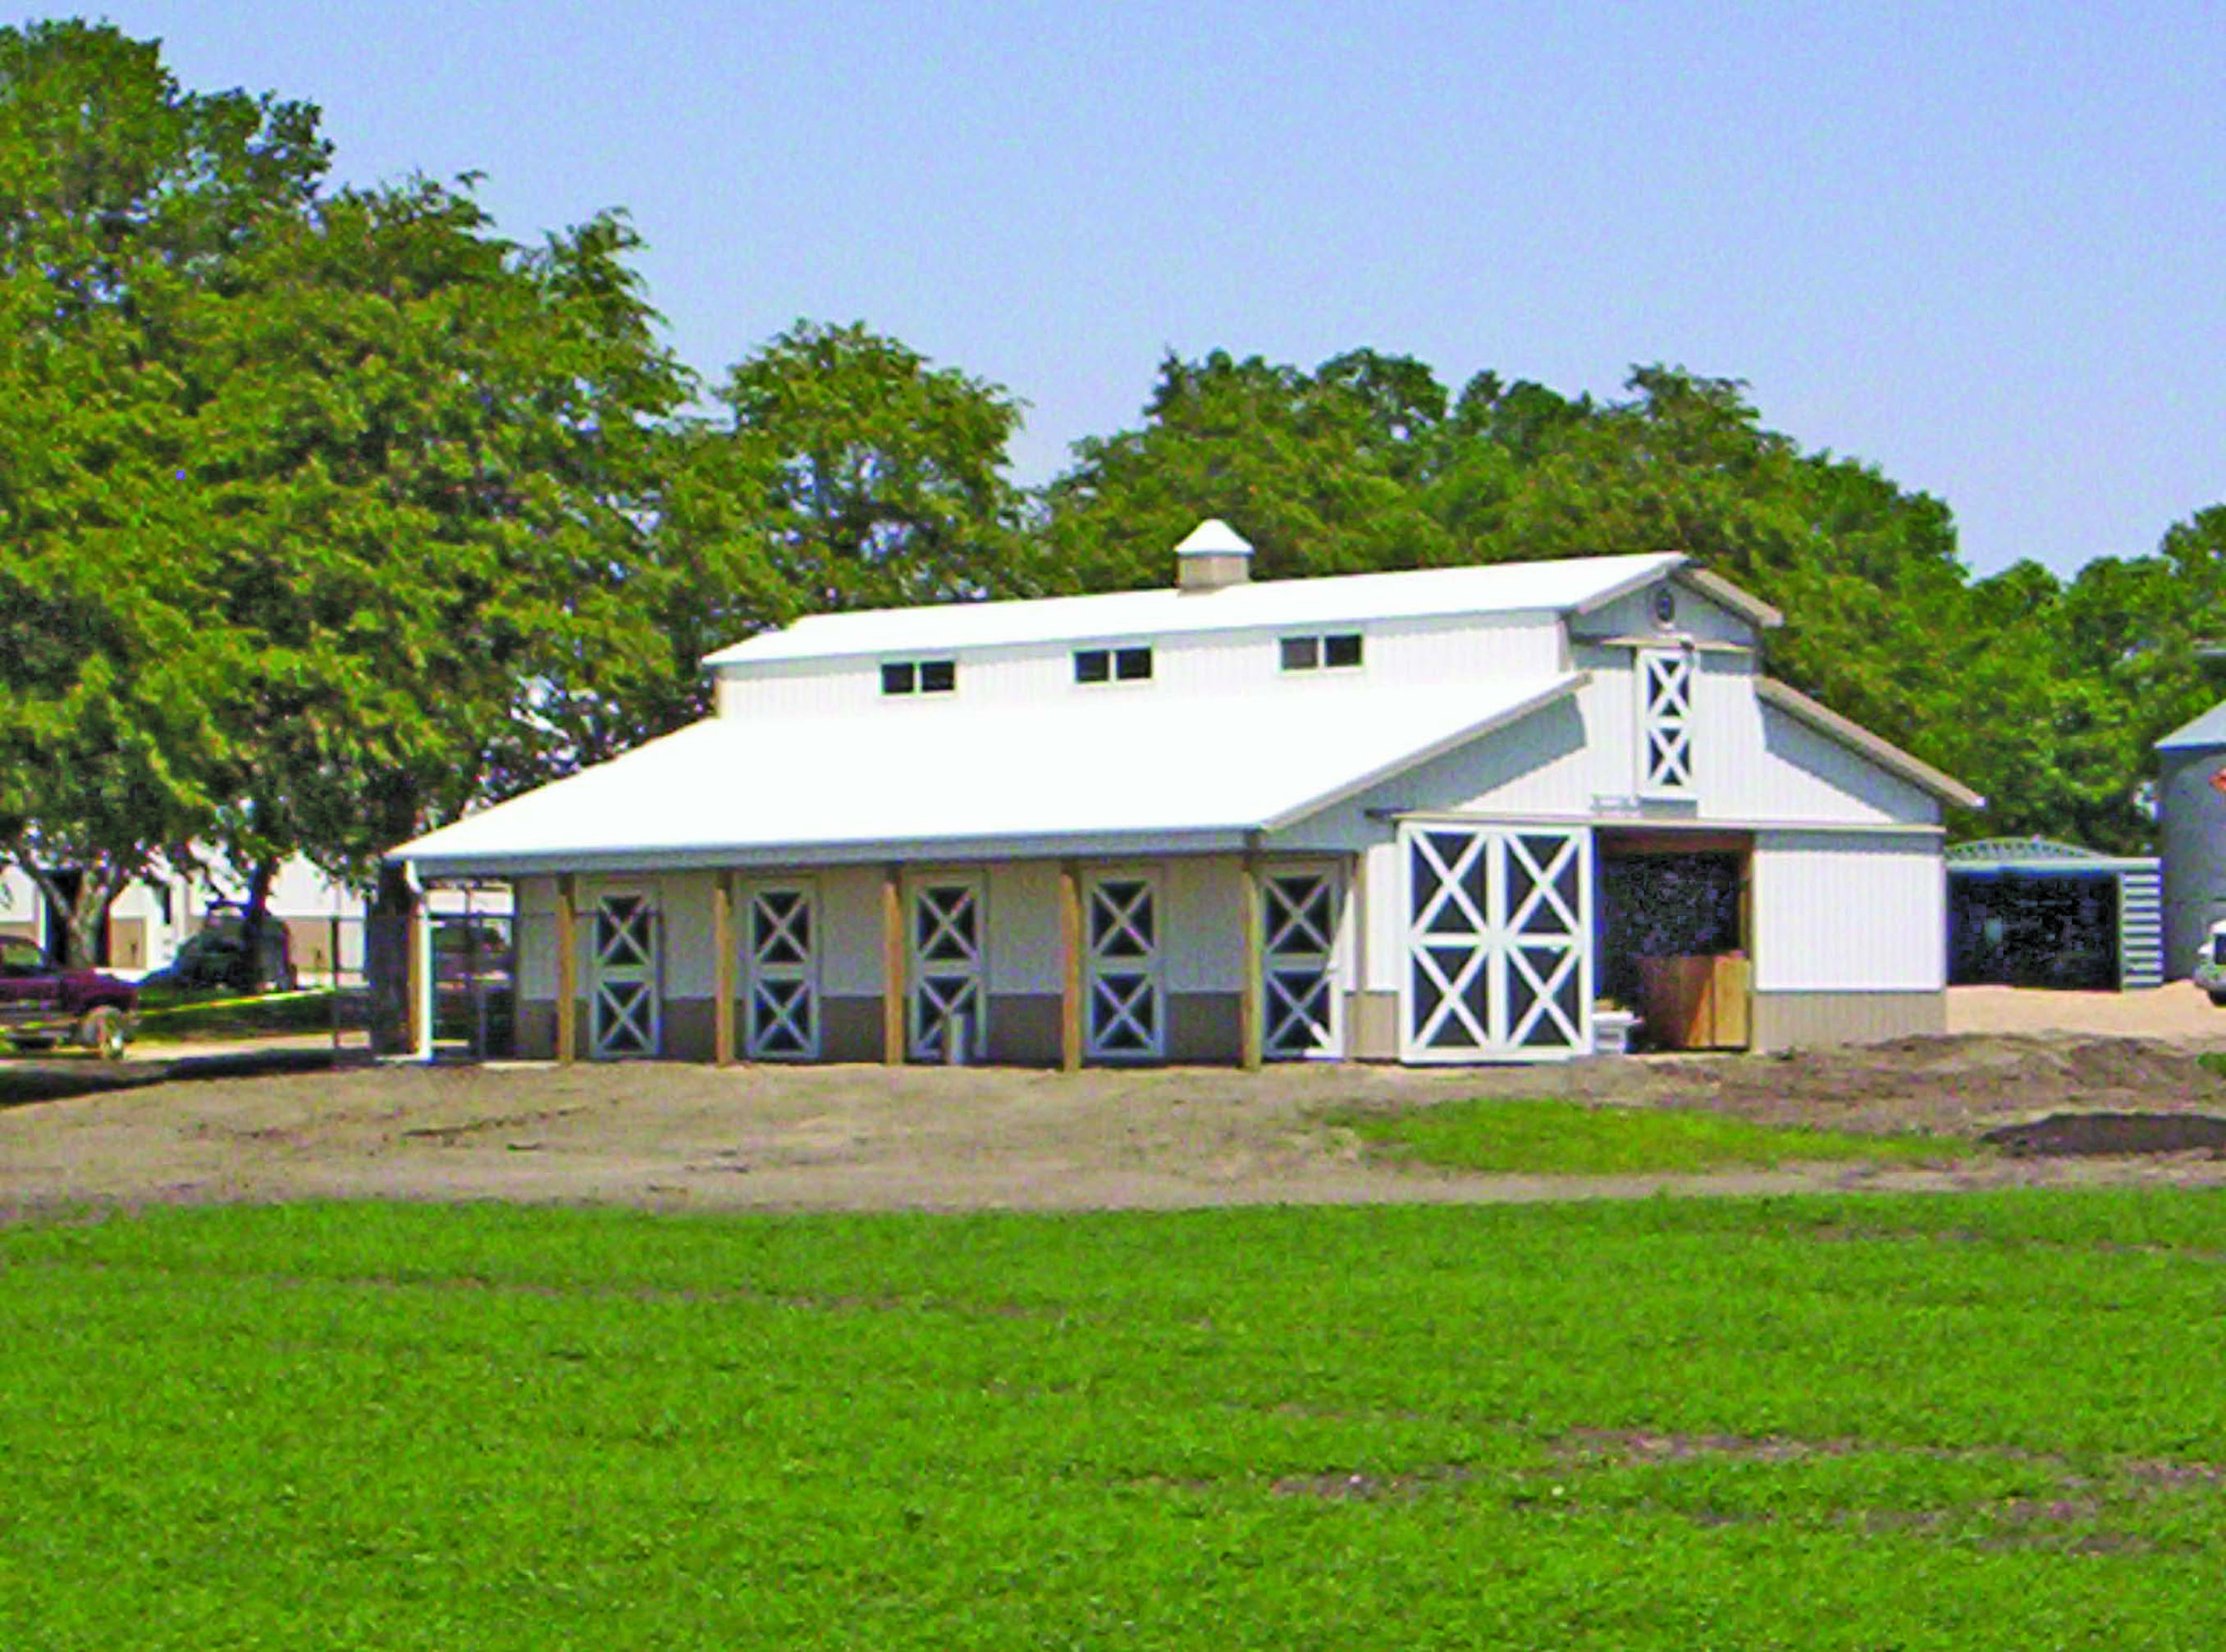 Equestrian Building